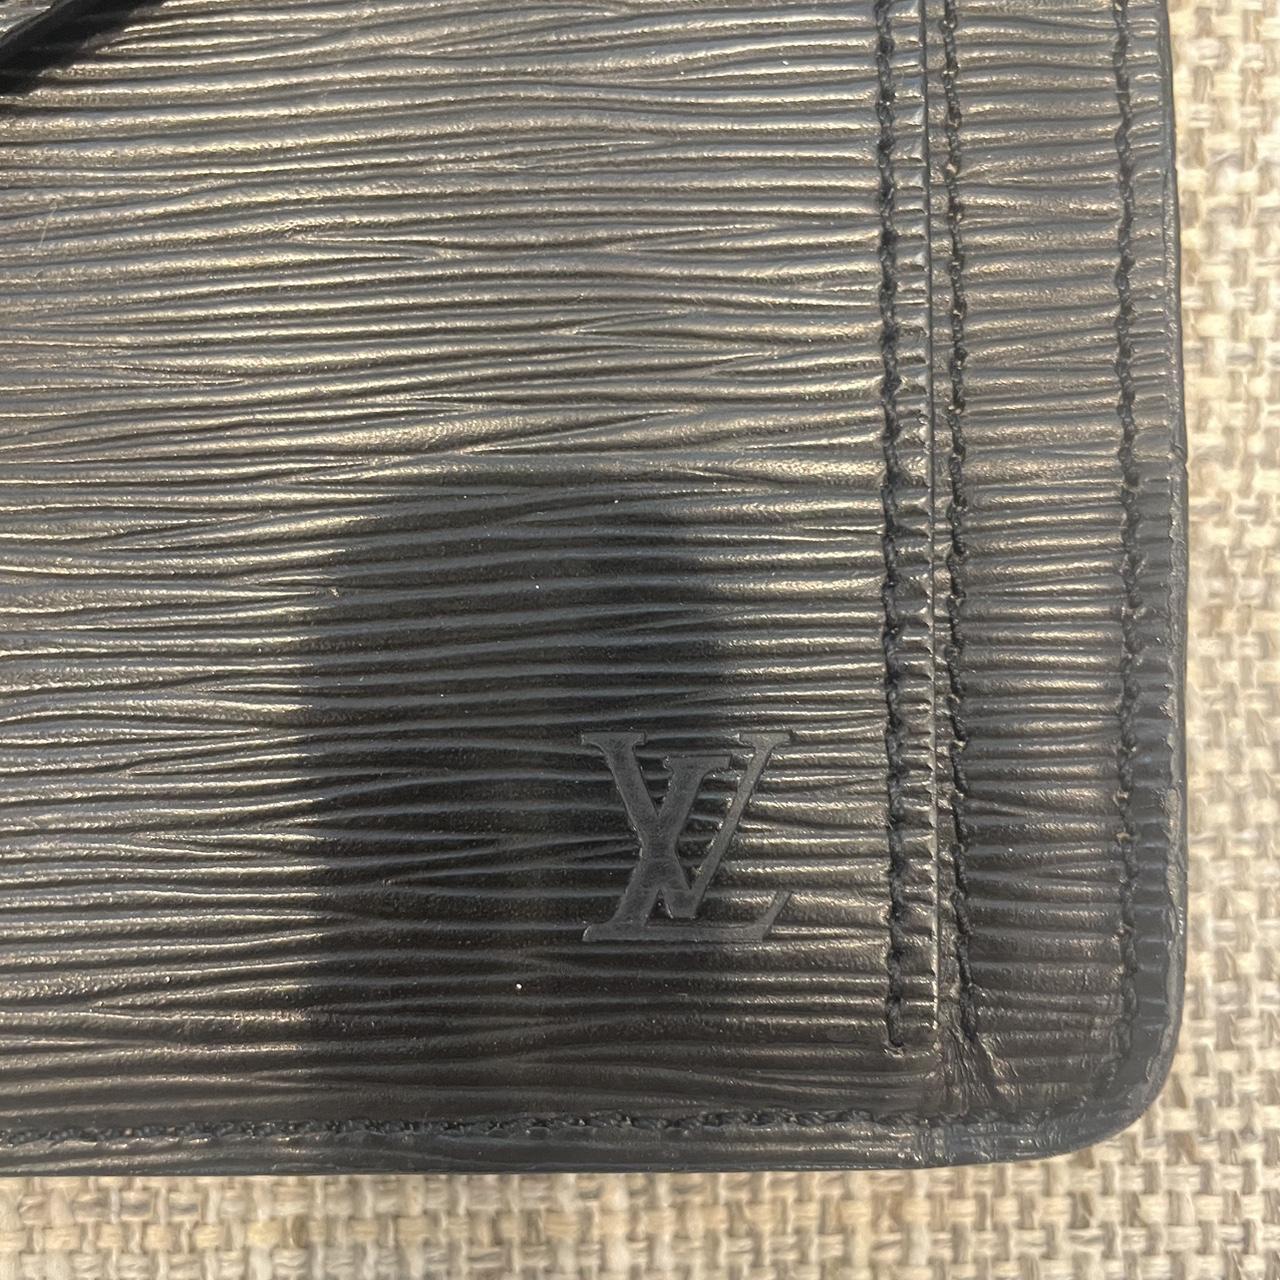 100% authentic Louis Vuitton blooming supple - Depop